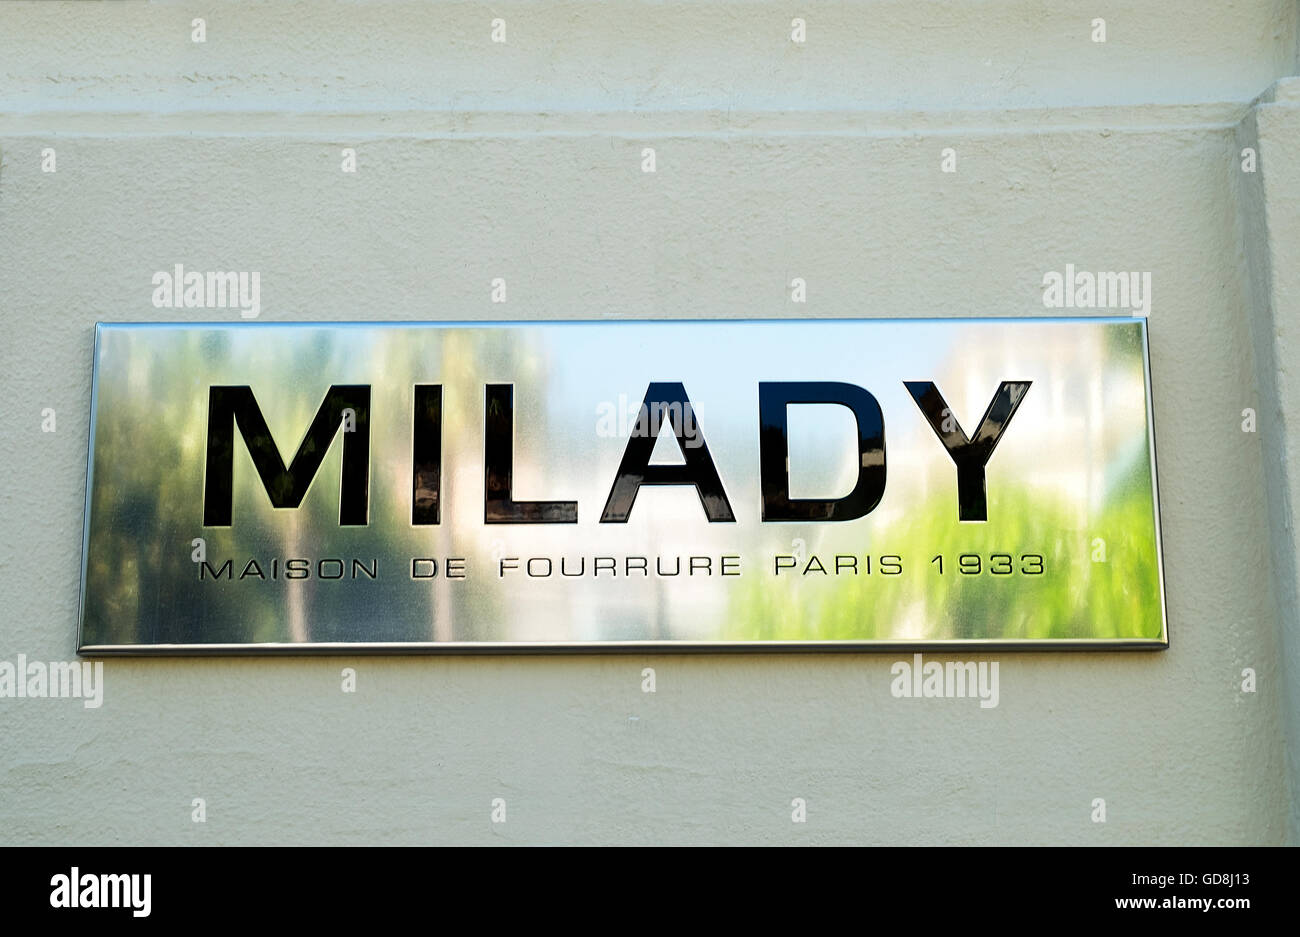 Milady fashion store sign Stock Photo - Alamy